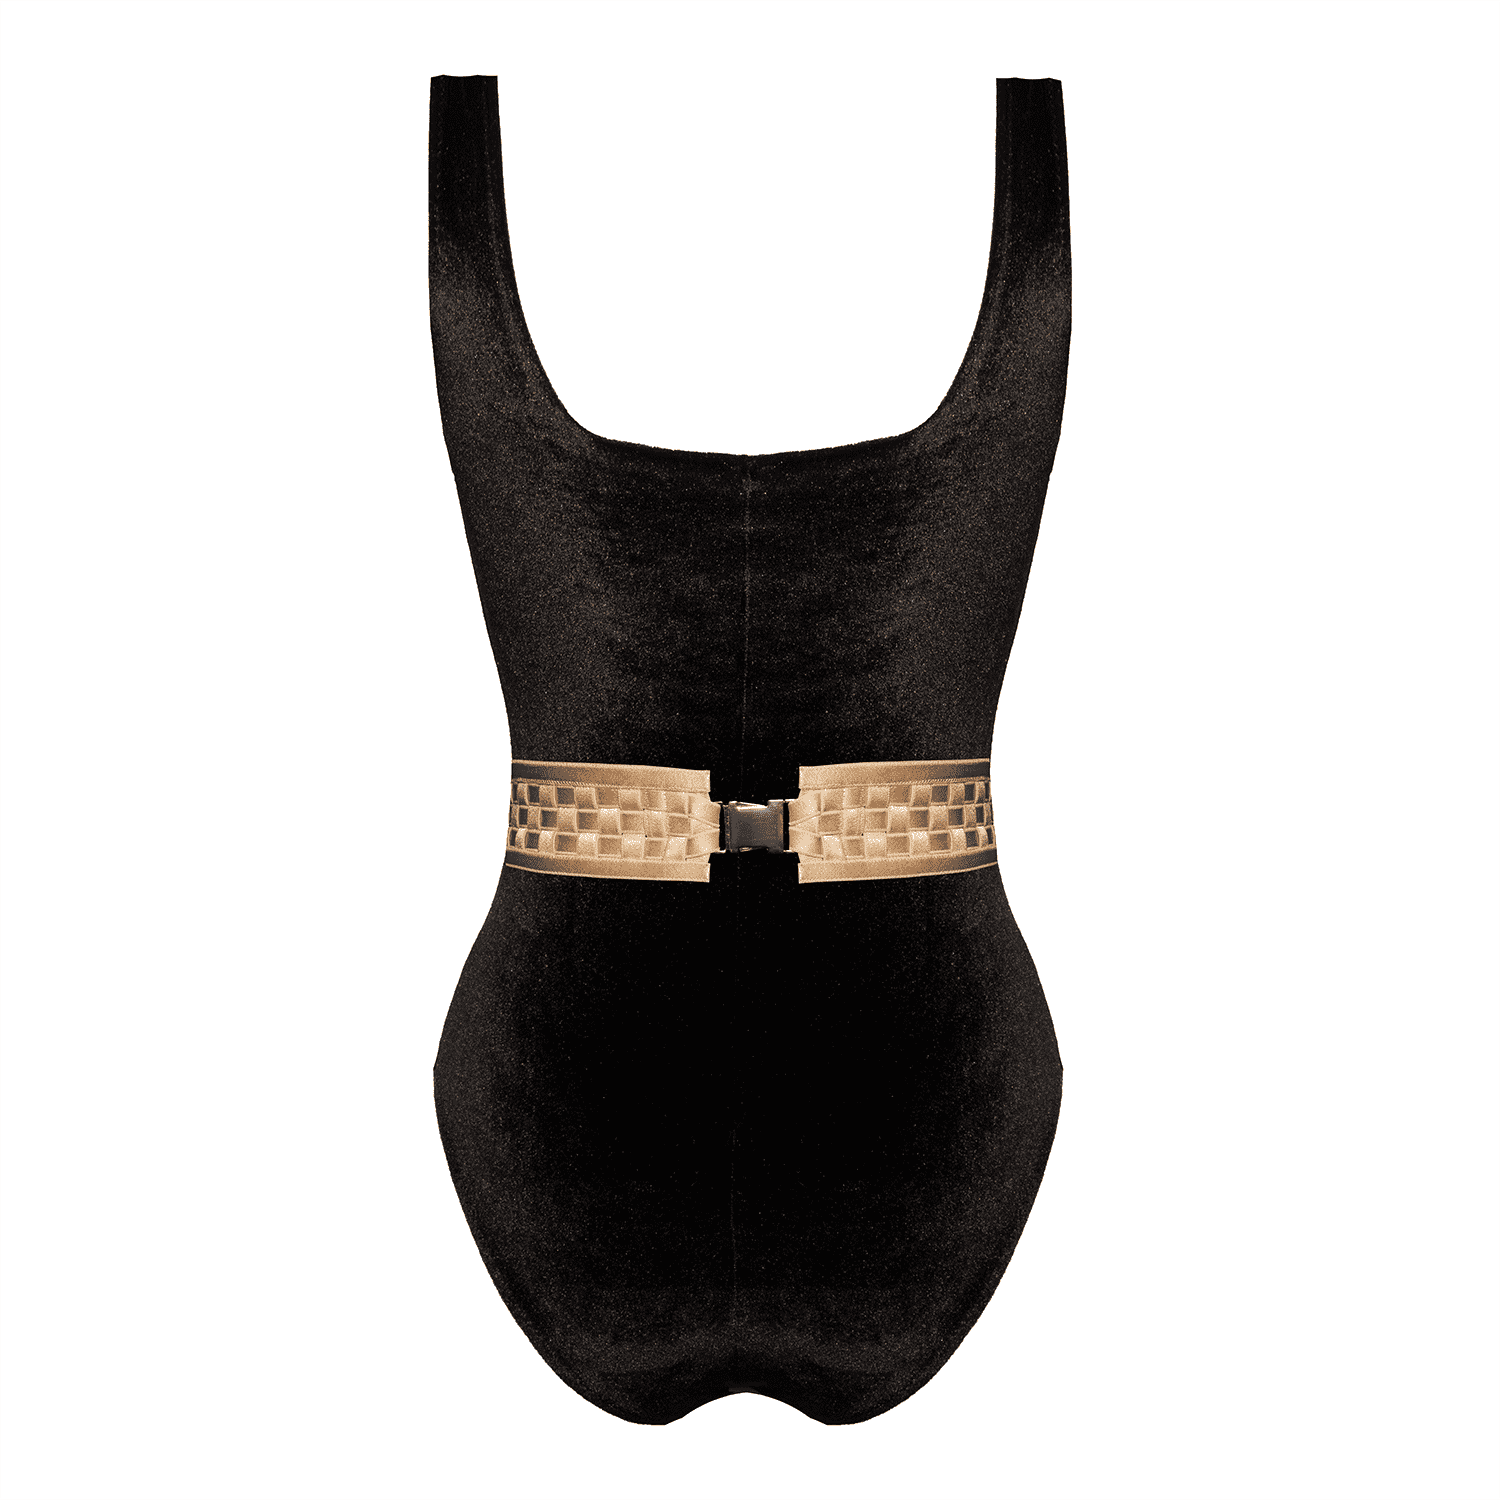 Dominata Bersèra black swimsuit - One Piece swimsuit by Keosme. Shop on yesUndress